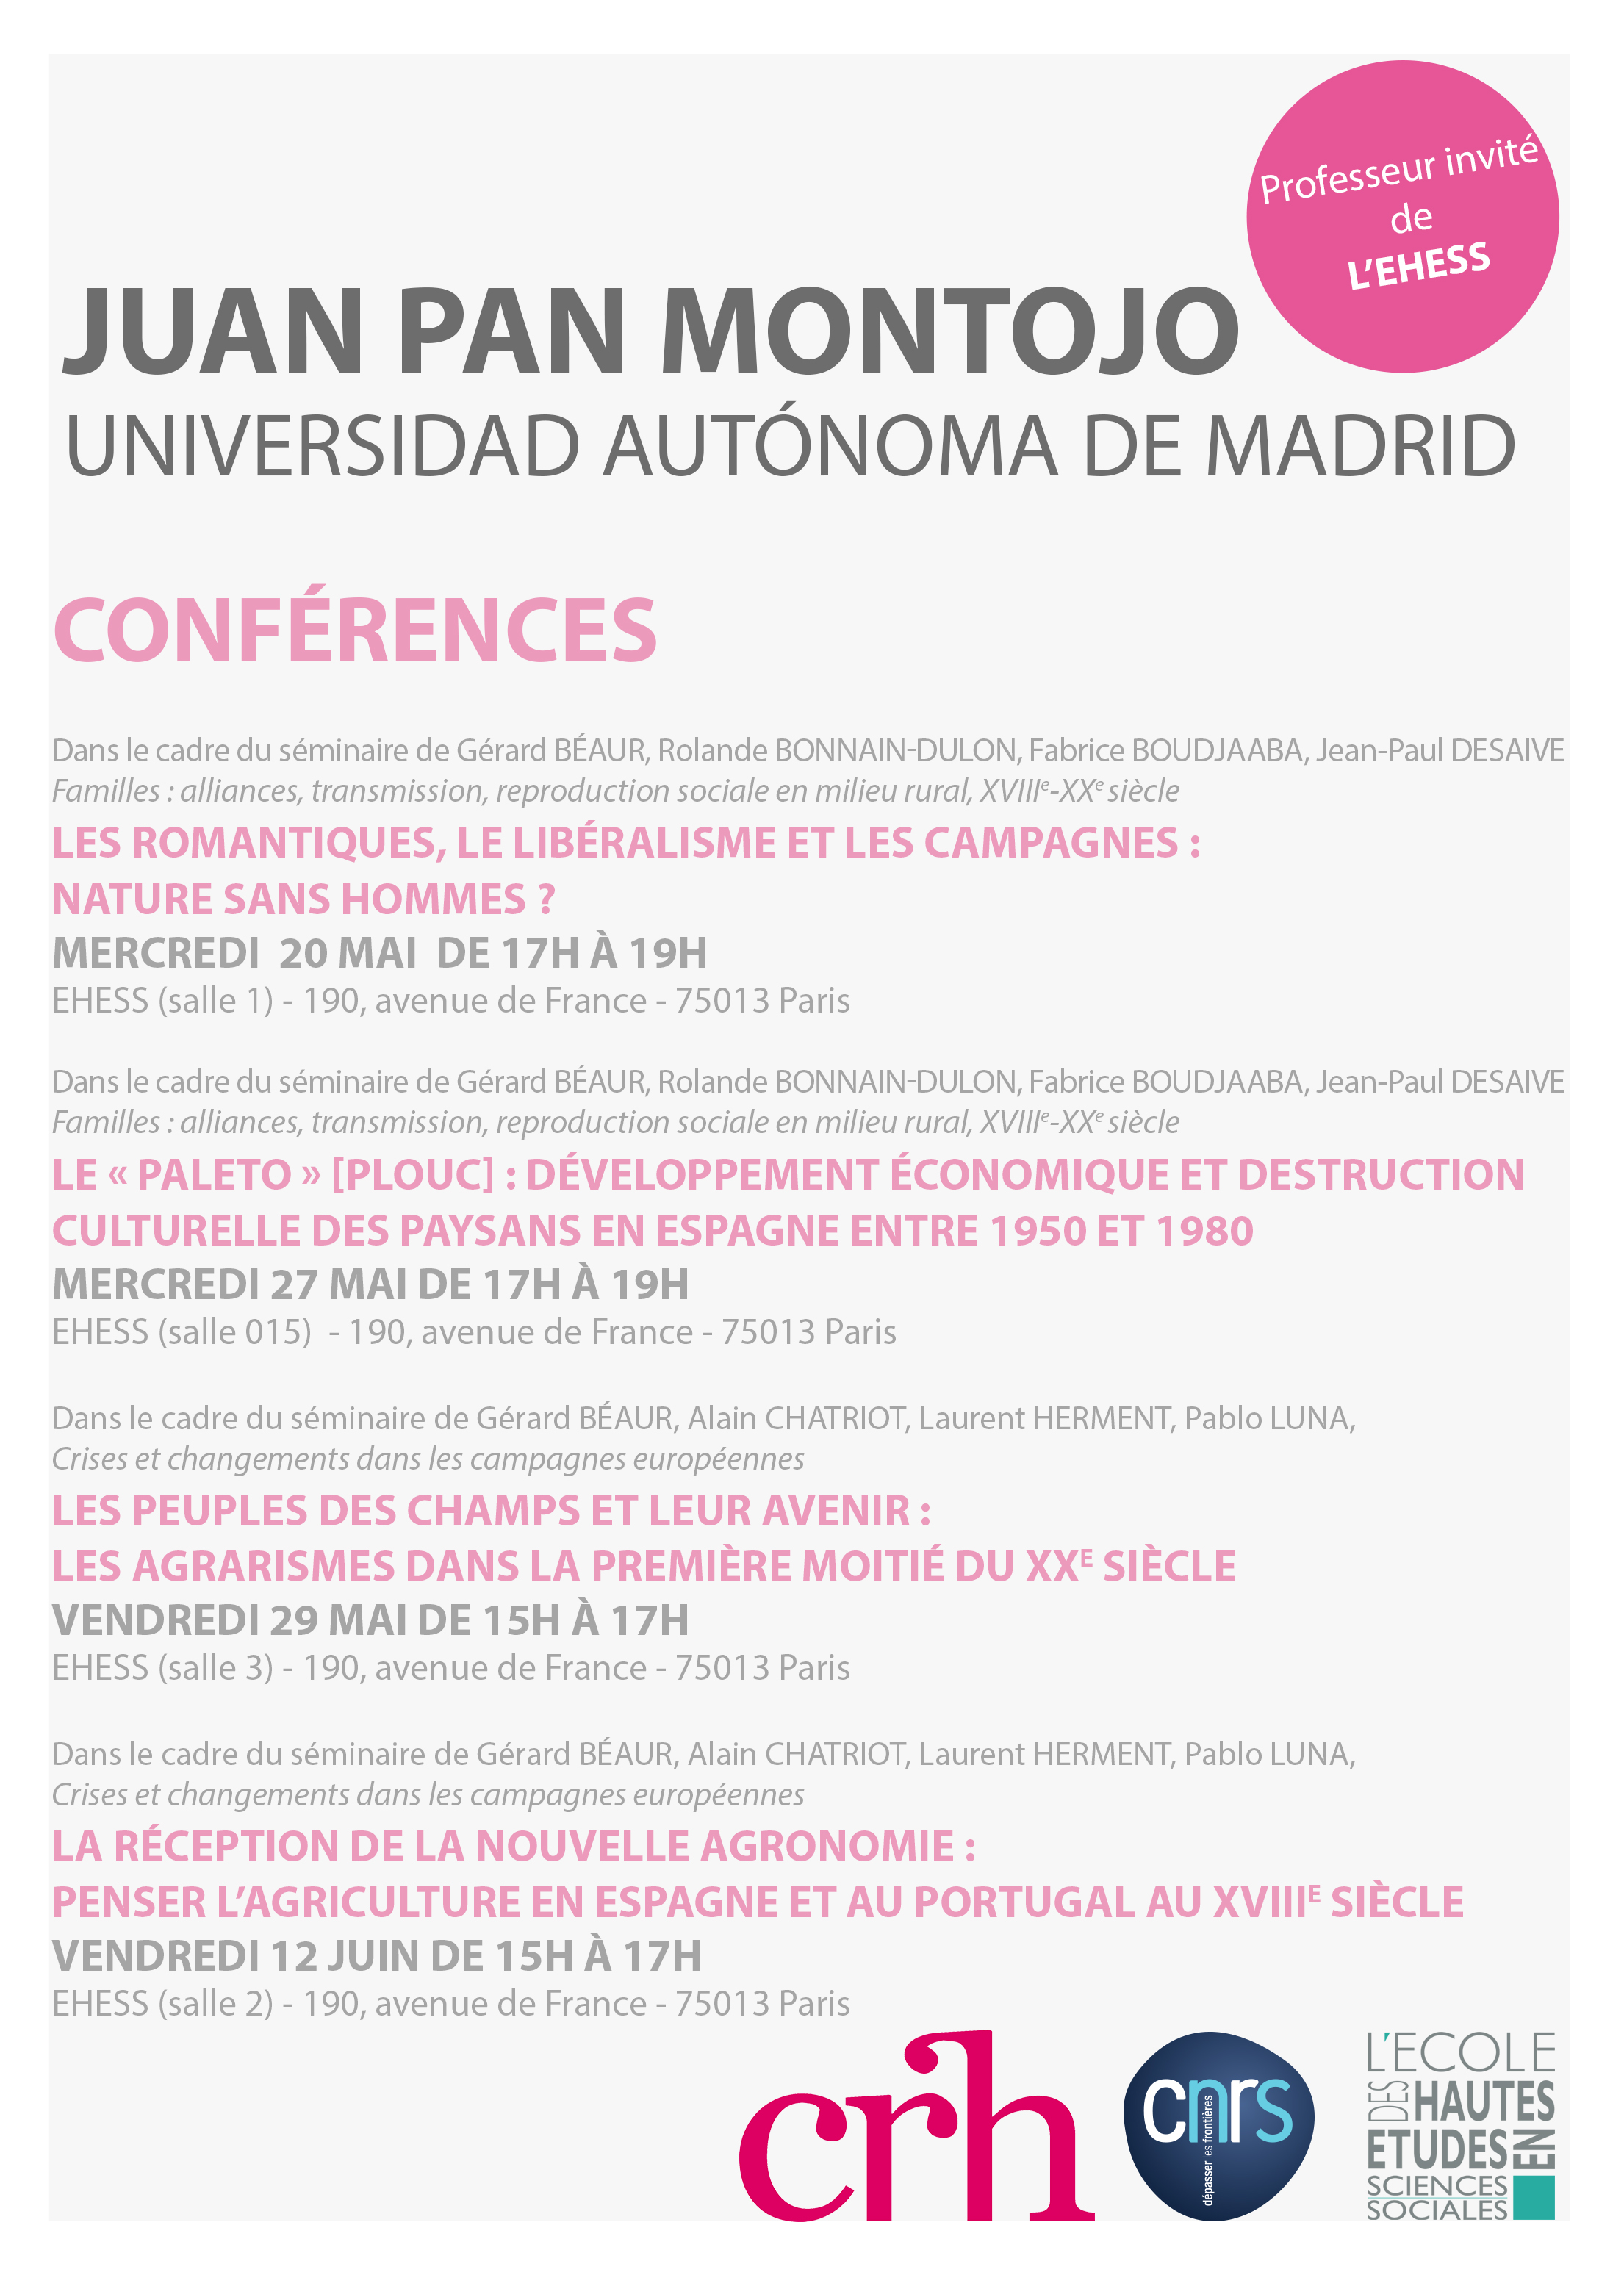 Conférences de Juan Pan Montojo